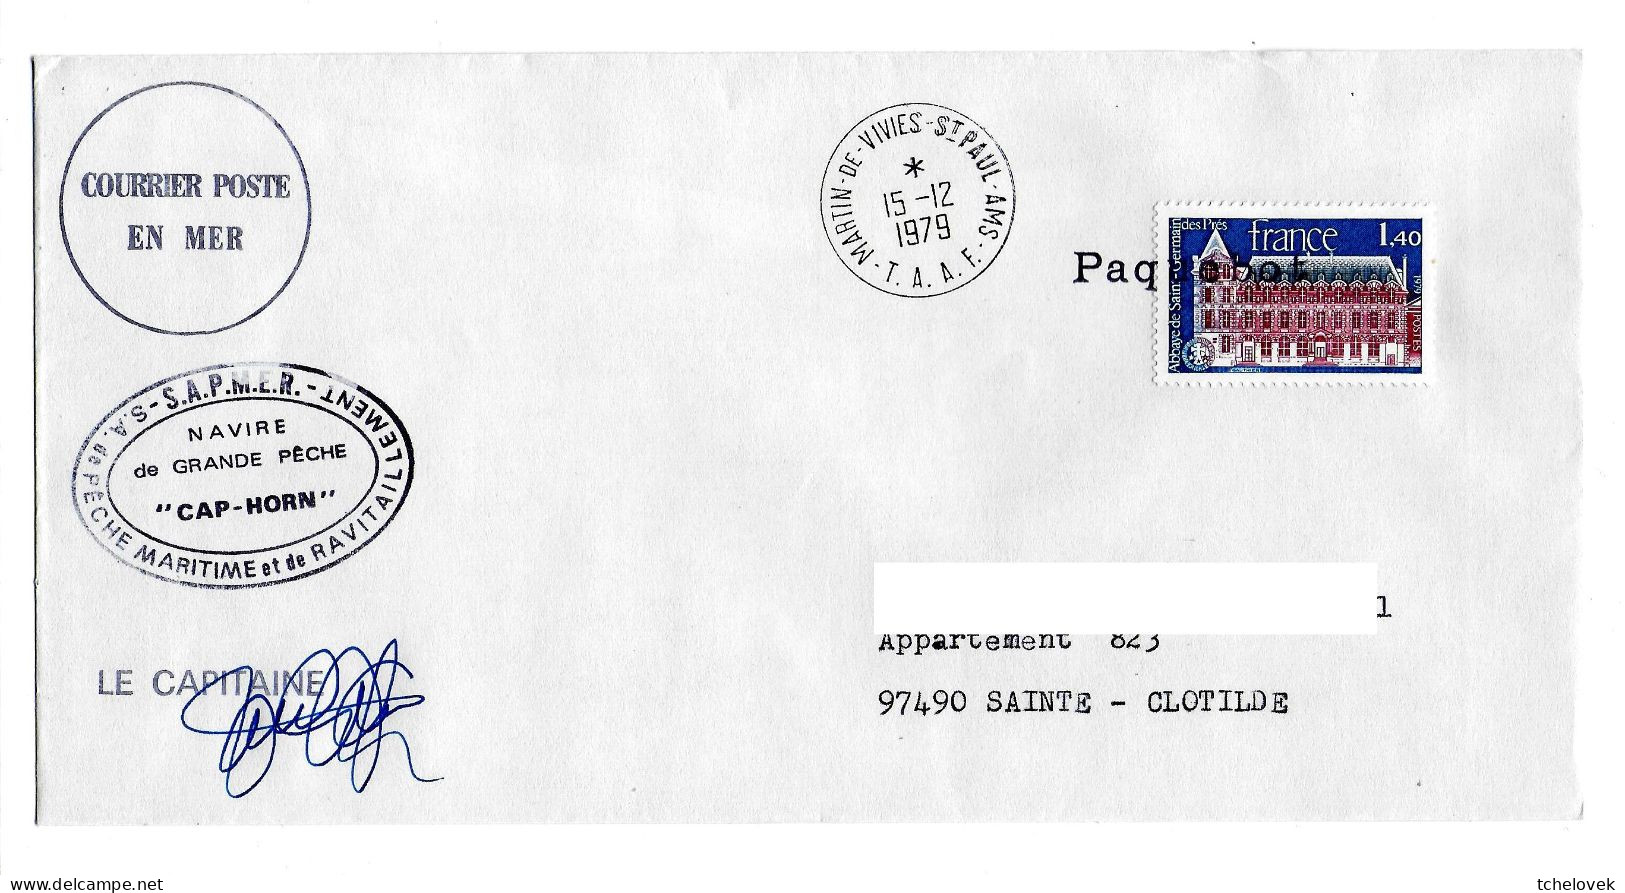 FSAT TAAF Cap Horn Sapmer 15.12.1979 SPA T. France 1.40 St Germain Des Pres (2) - Lettres & Documents